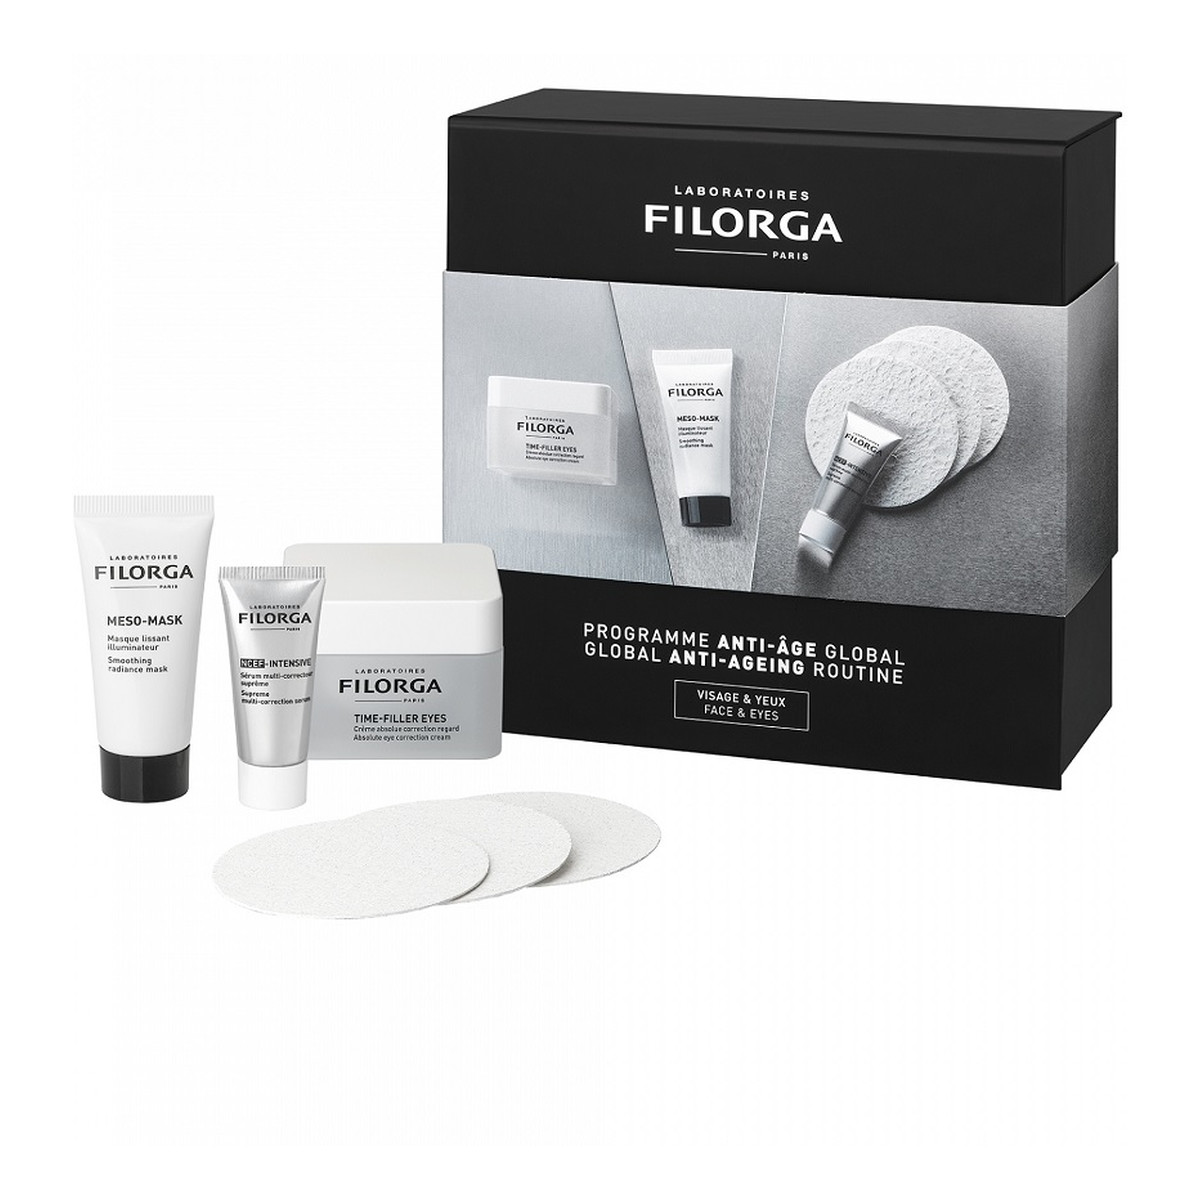 Filorga Global Anti-Ageing Routine Zestaw time-filler eyes 15ml + ncef-intensive serum 7ml + meso-mask 15ml + cellulose sponges